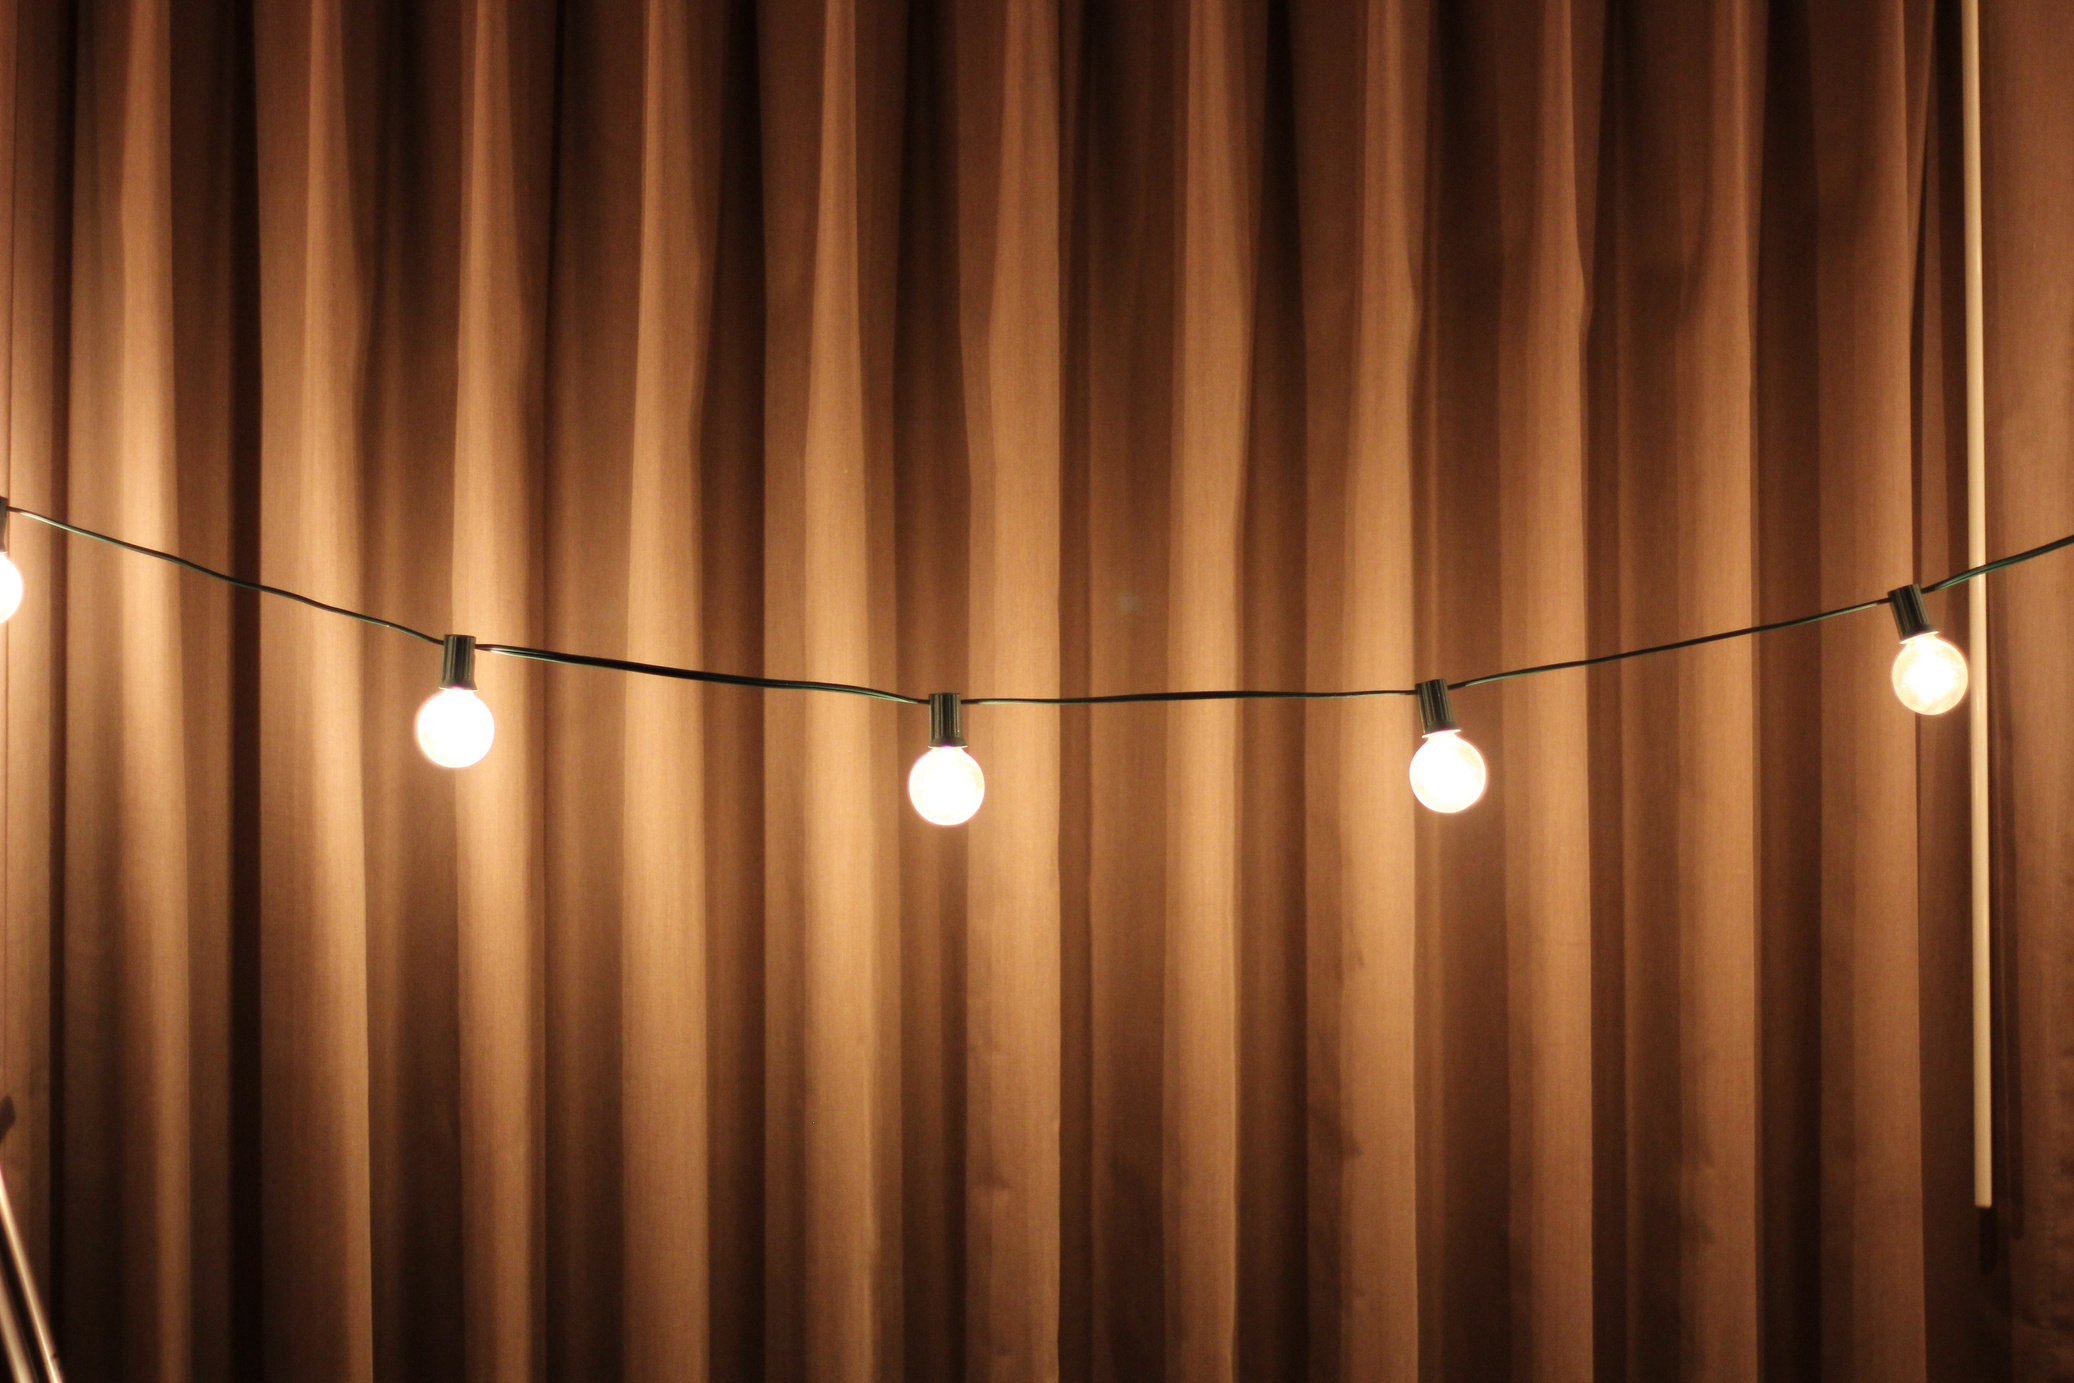 Black String Lights Beside Brown Curtain